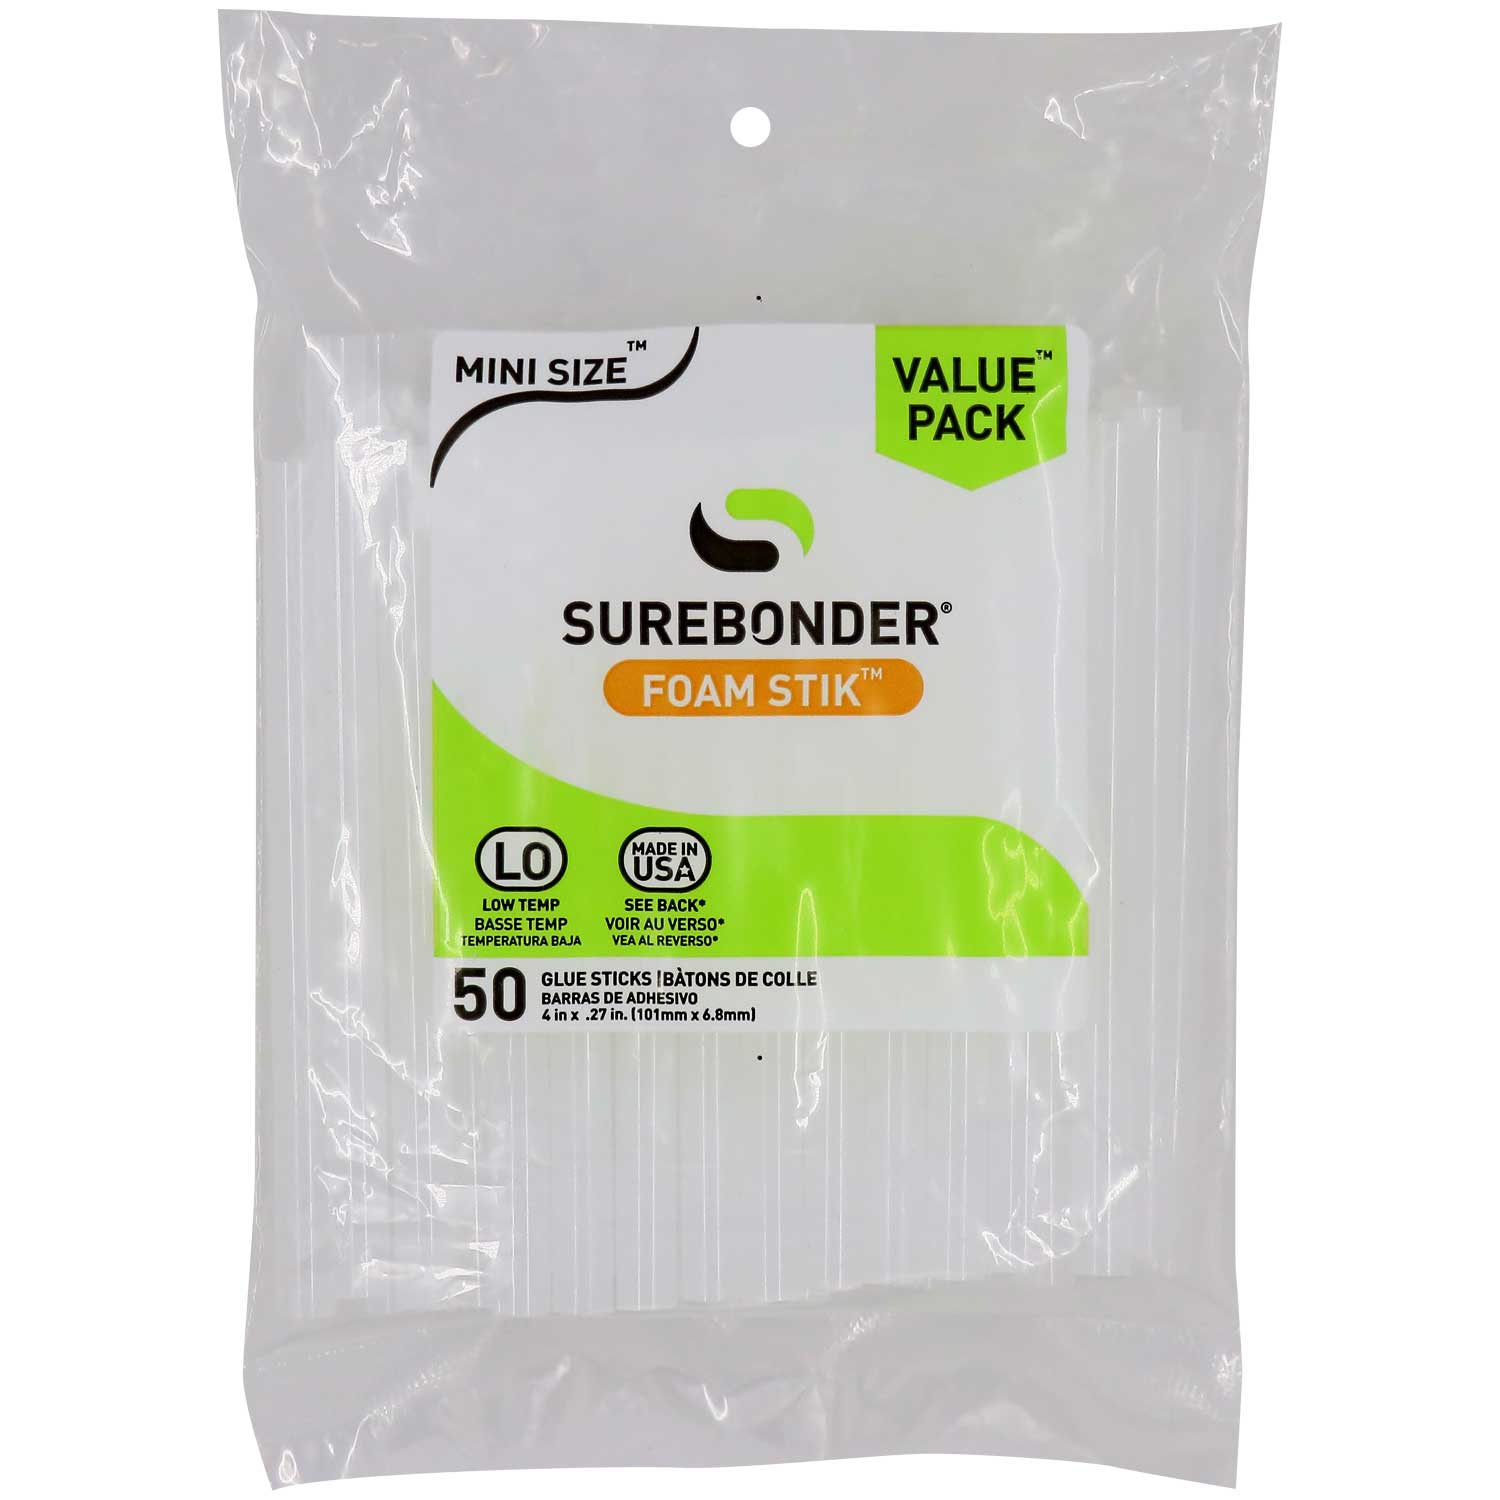 Surebonder Mini Glue Sticks-100 Value Pack